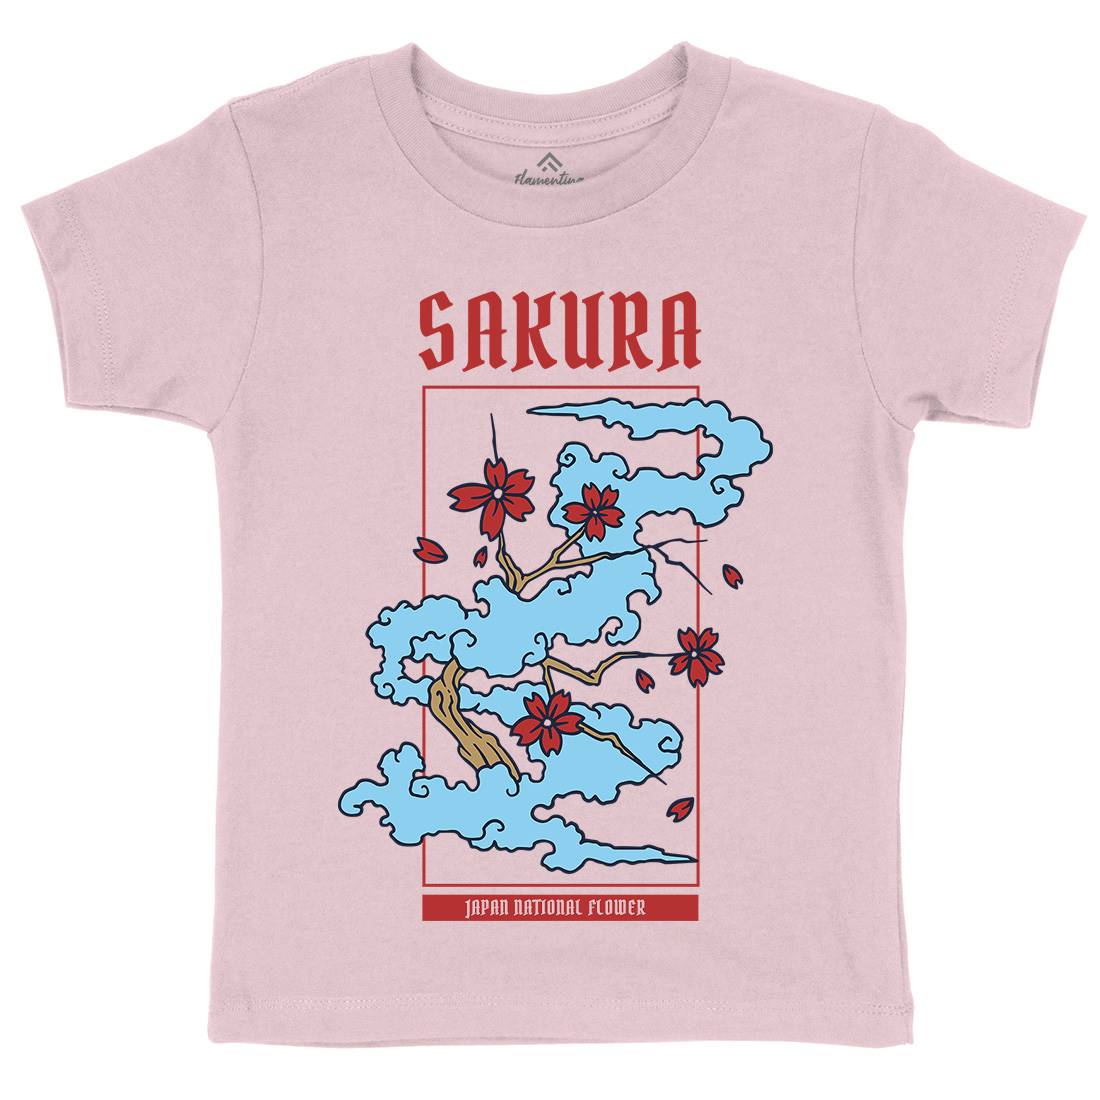 Sakura Kids Organic Crew Neck T-Shirt Asian C766